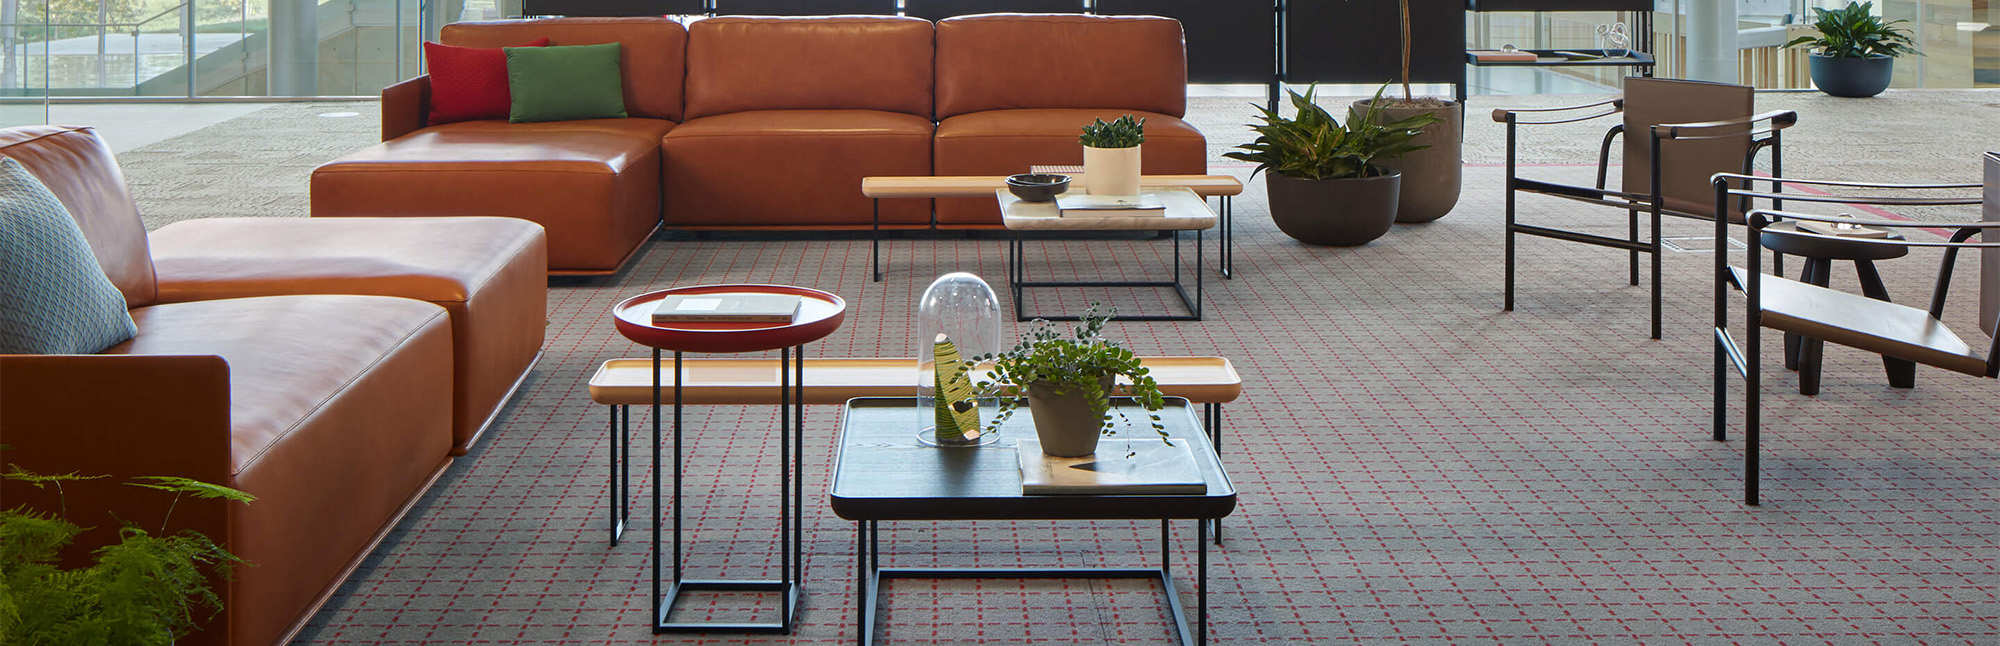 Haworth Cassina furniture in a lobby space